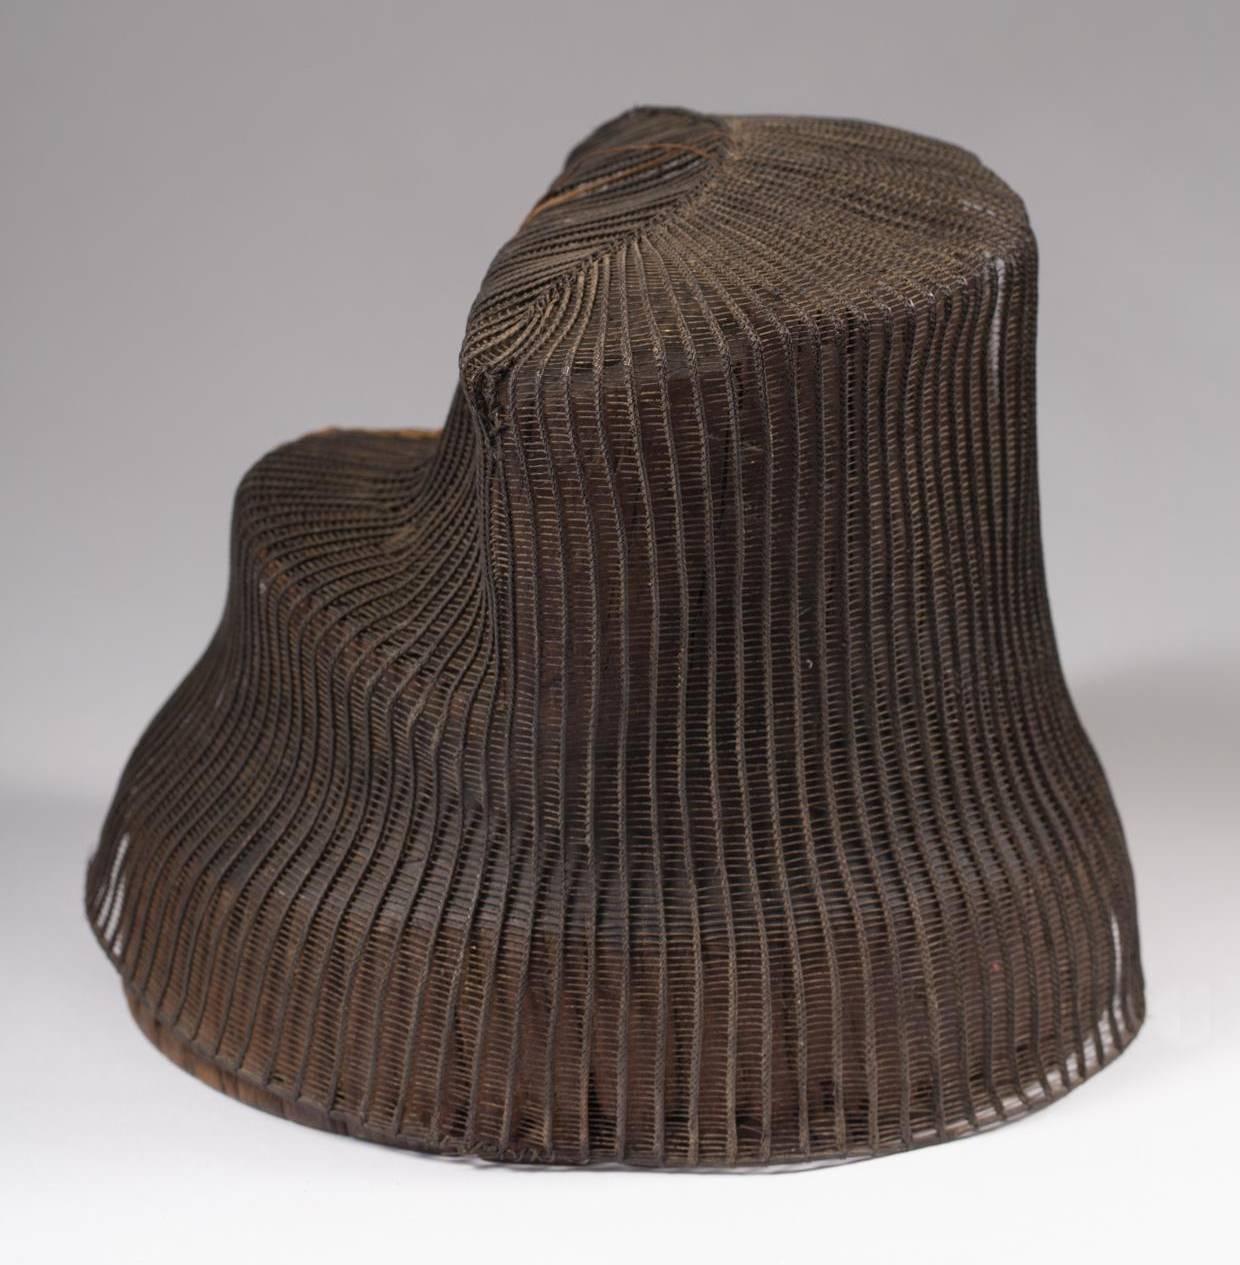 Minimalist Late 19th Century Horse Hair Hat with Original Wood Base, Korea